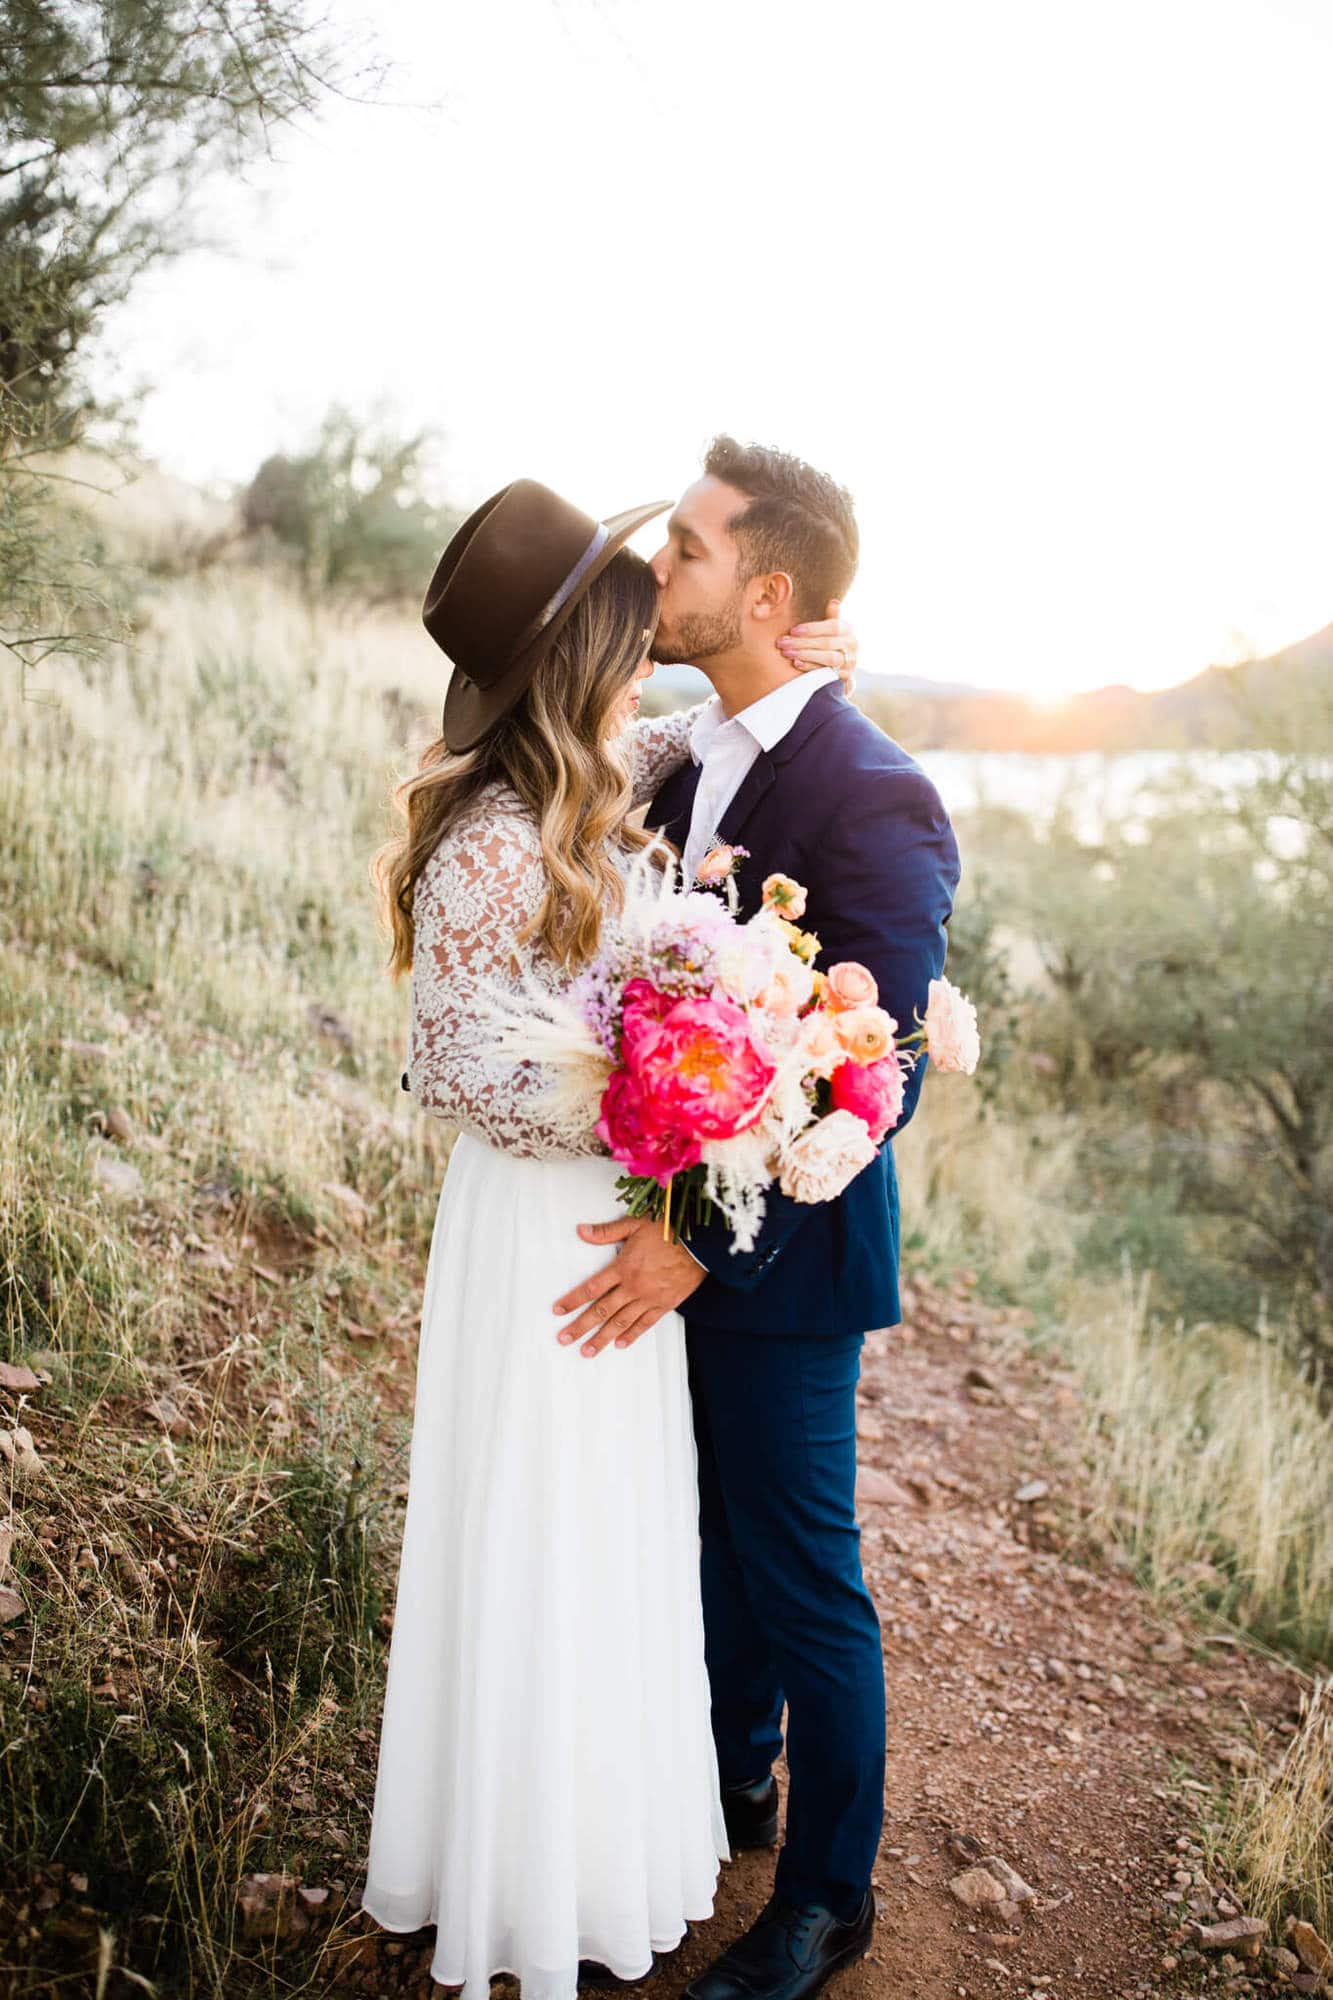 Saguaro Lake is a hidden gem of a desert elopement location. Check out this elopement for all your desert elopement inspiration.